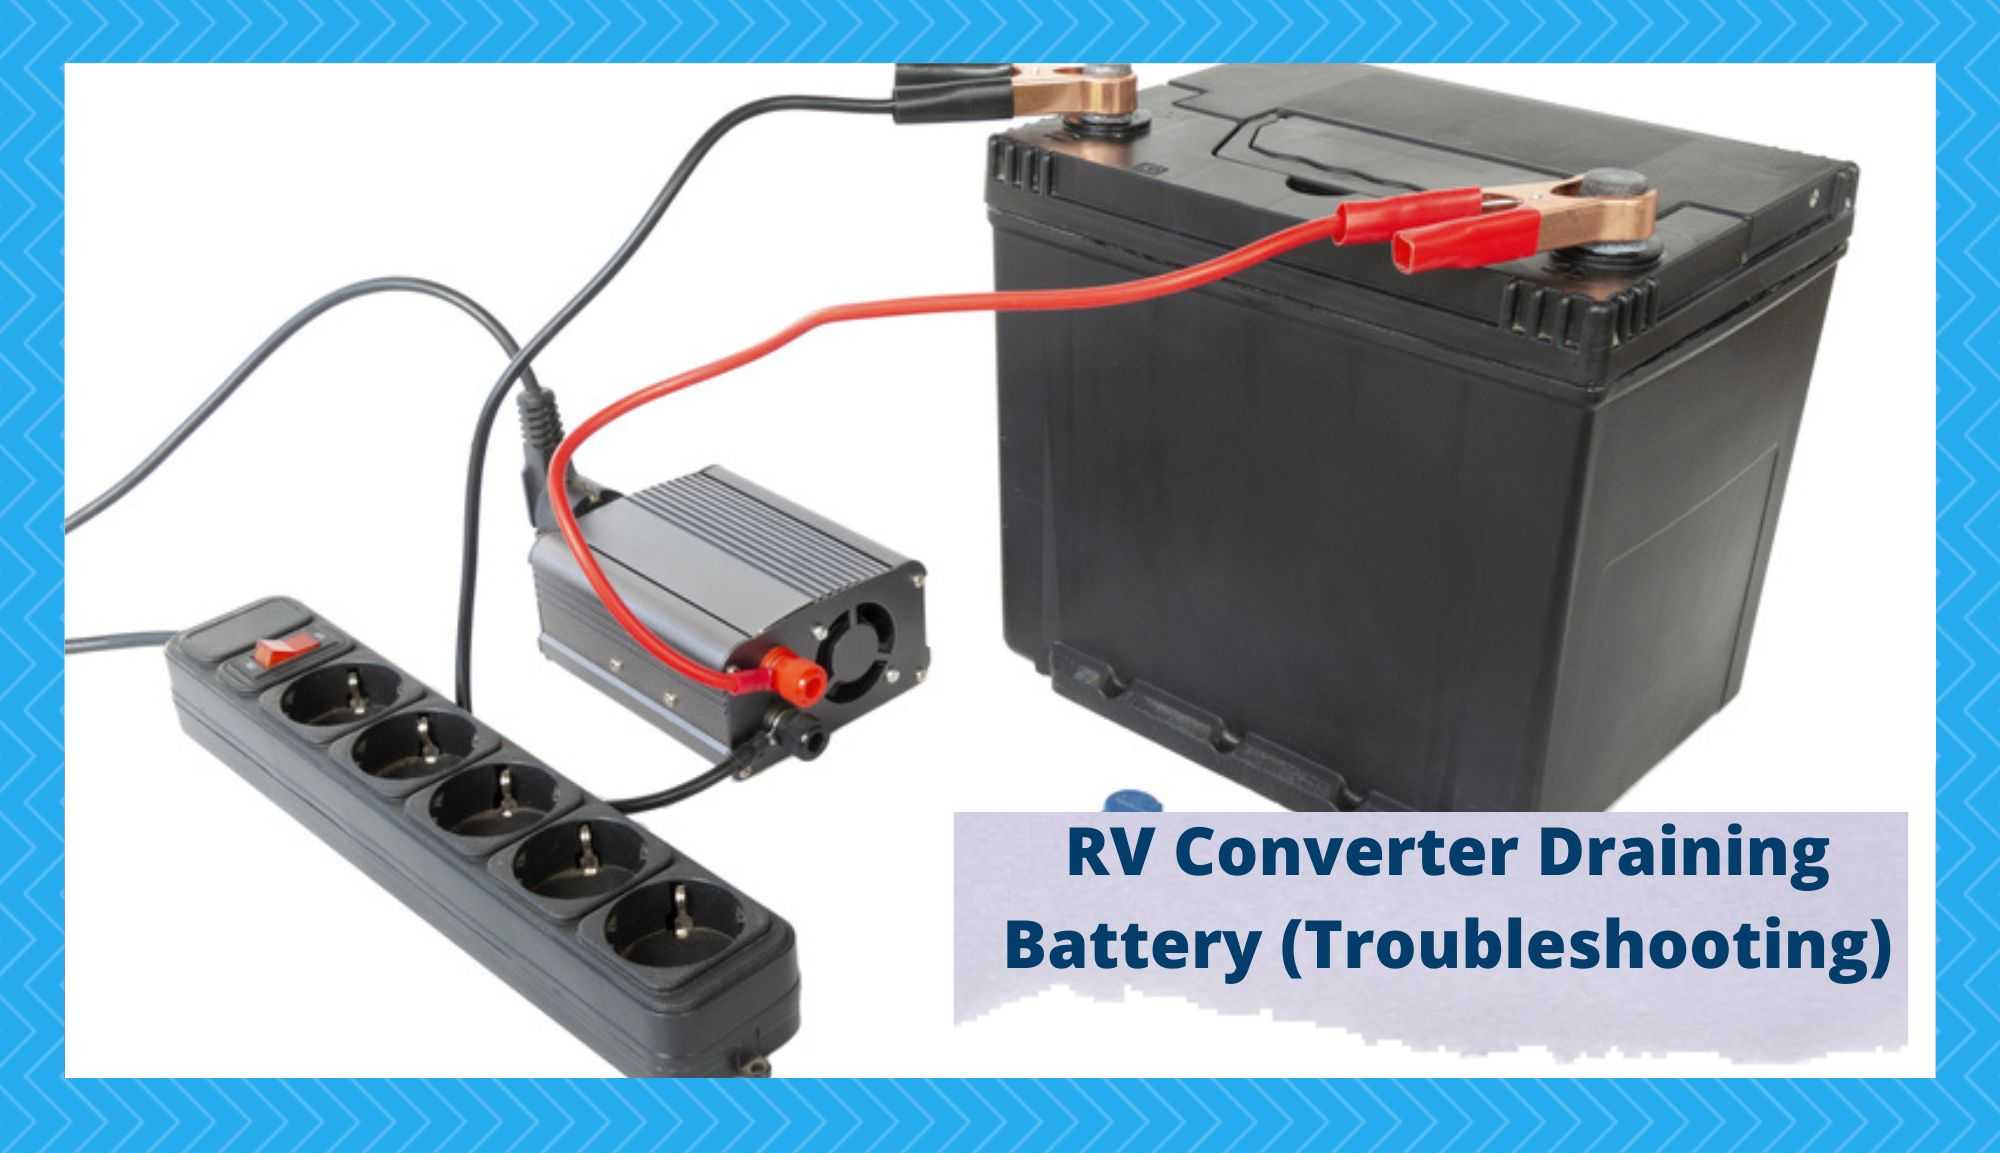 RV Converter Draining Battery